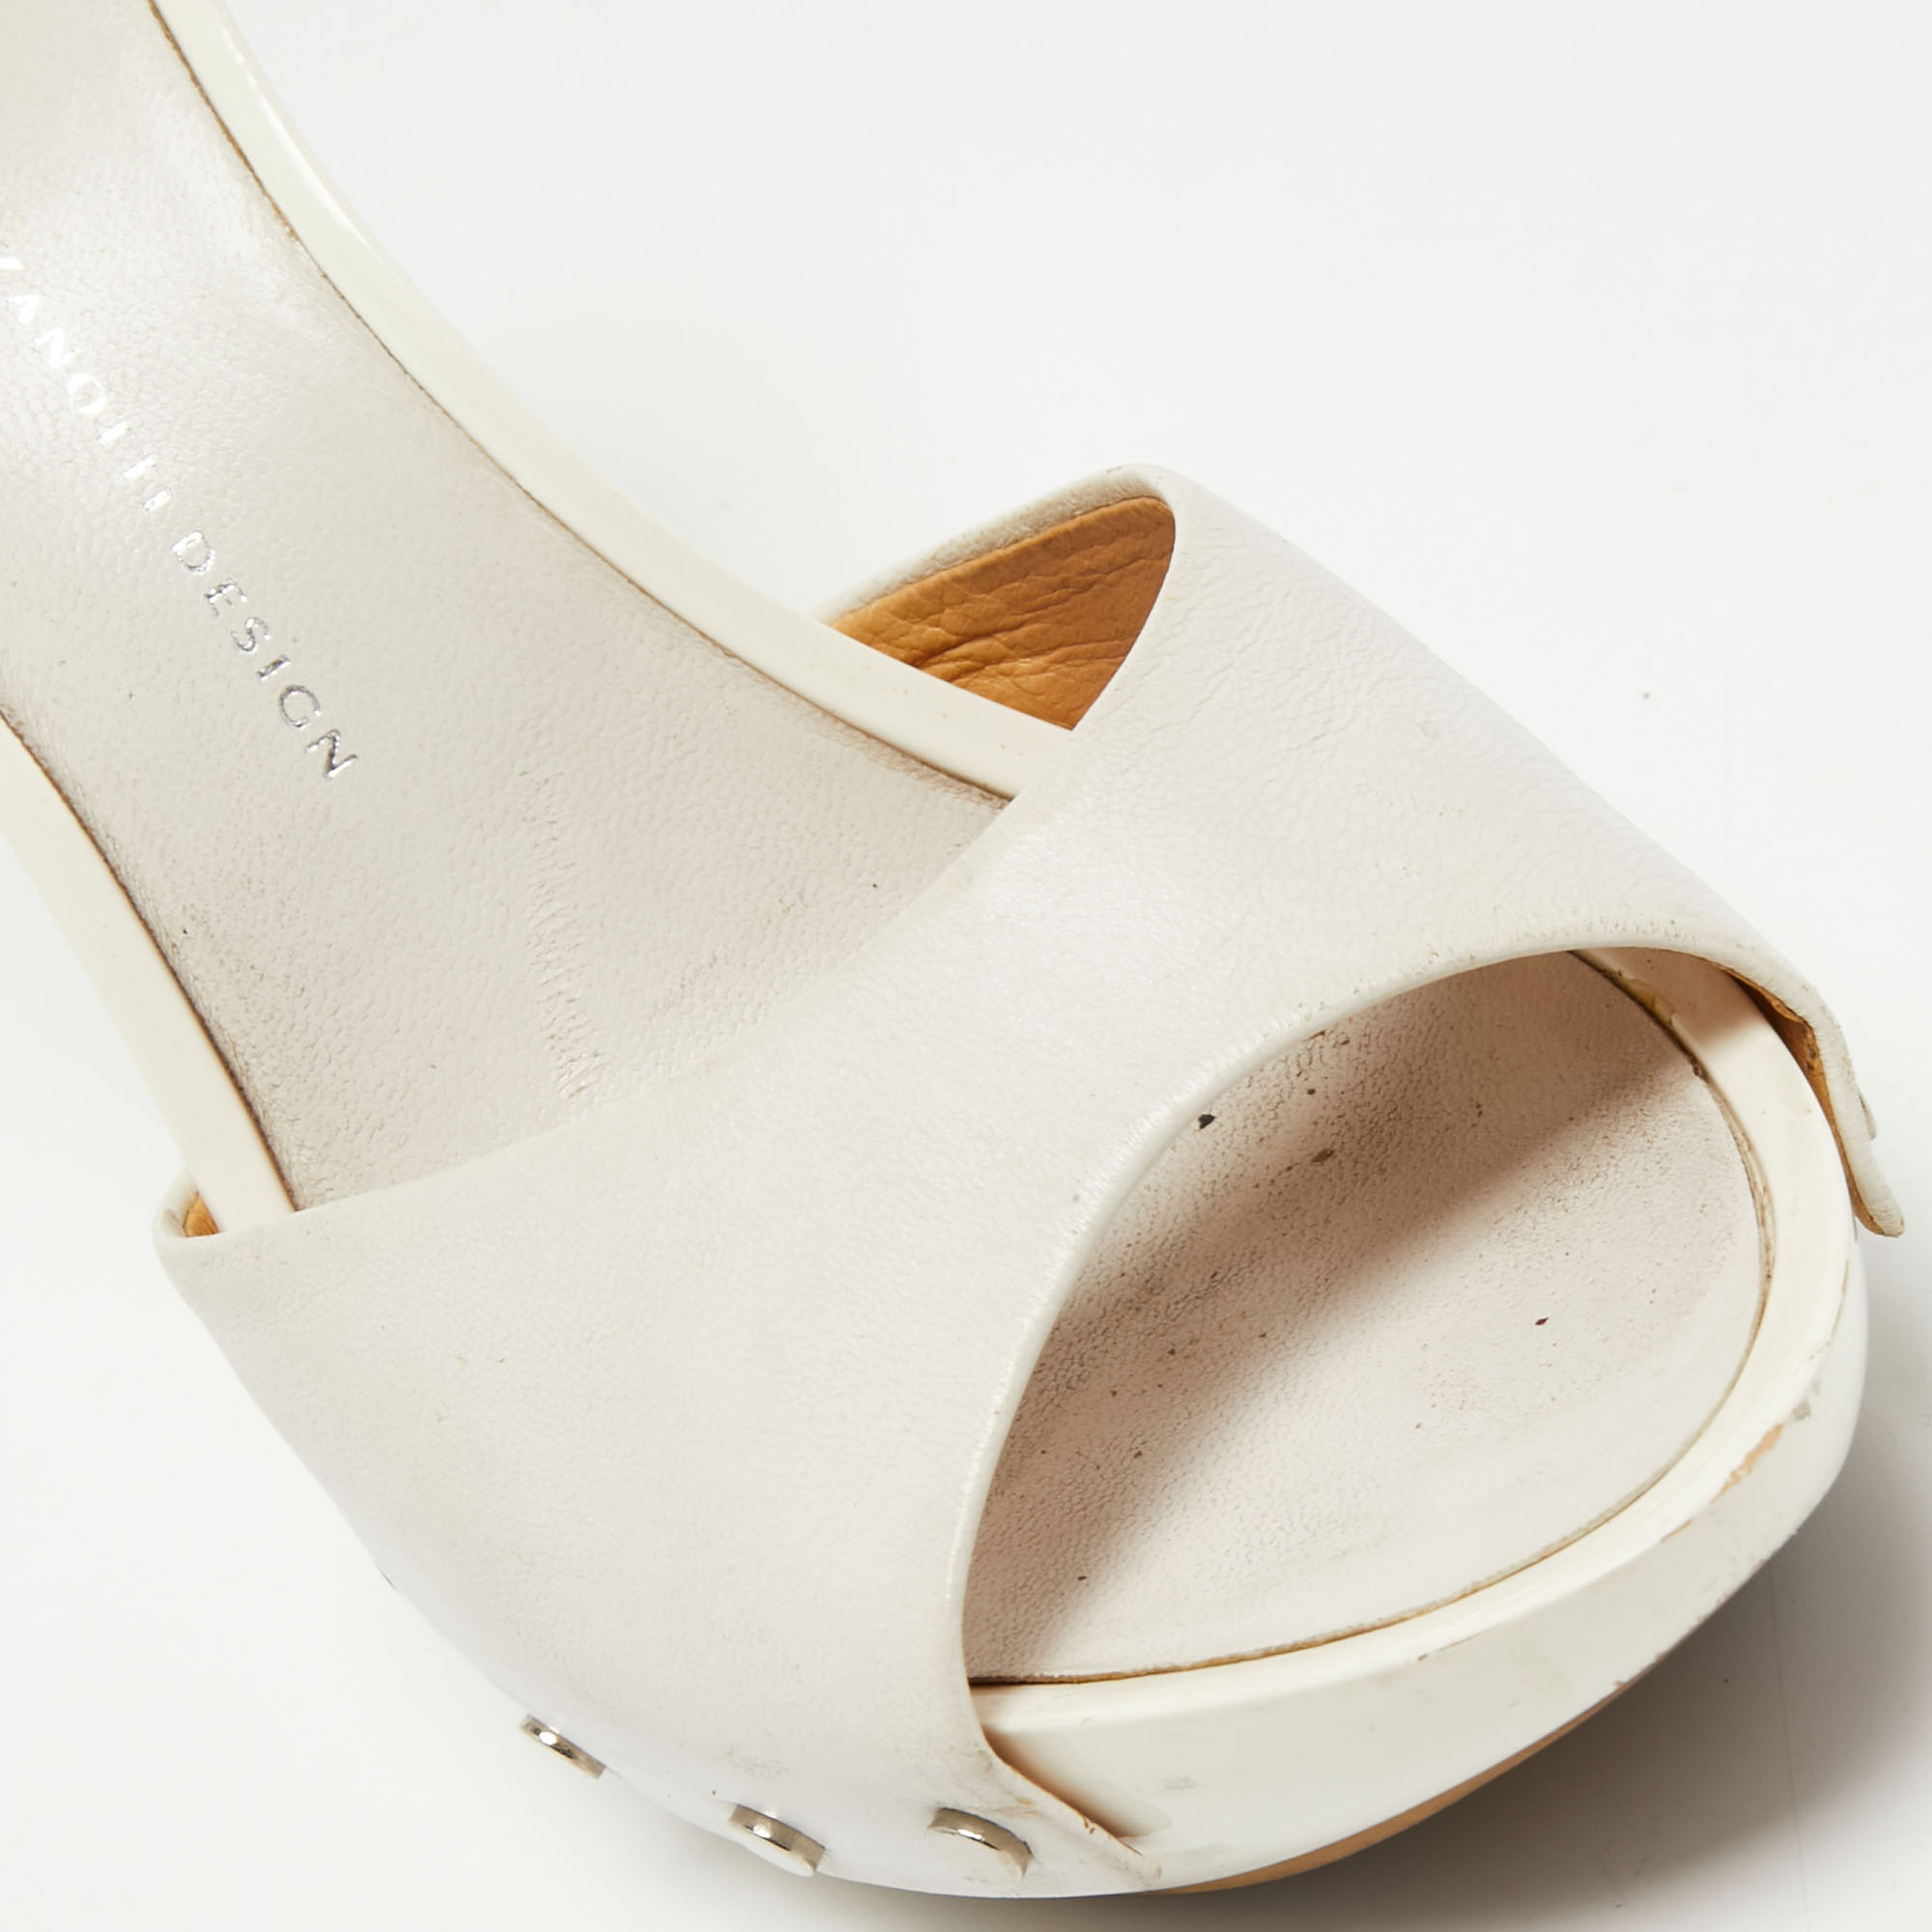 Giuseppe Zanotti White Leather Open Toe Slide Sandals Size 36